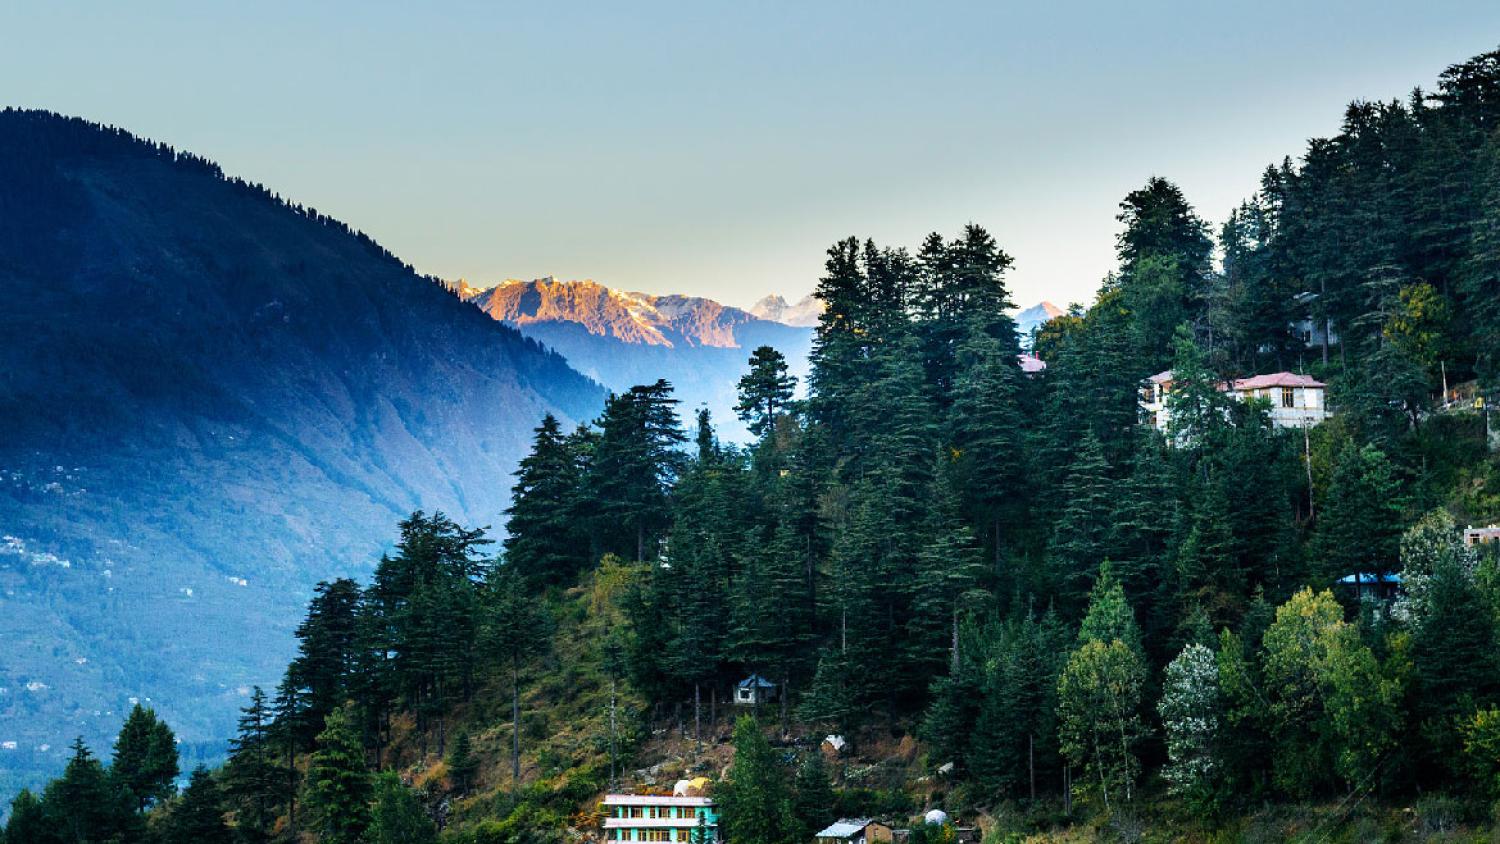 Manali - The Enchanting Holiday in This Himachal Pradesh Hill Station